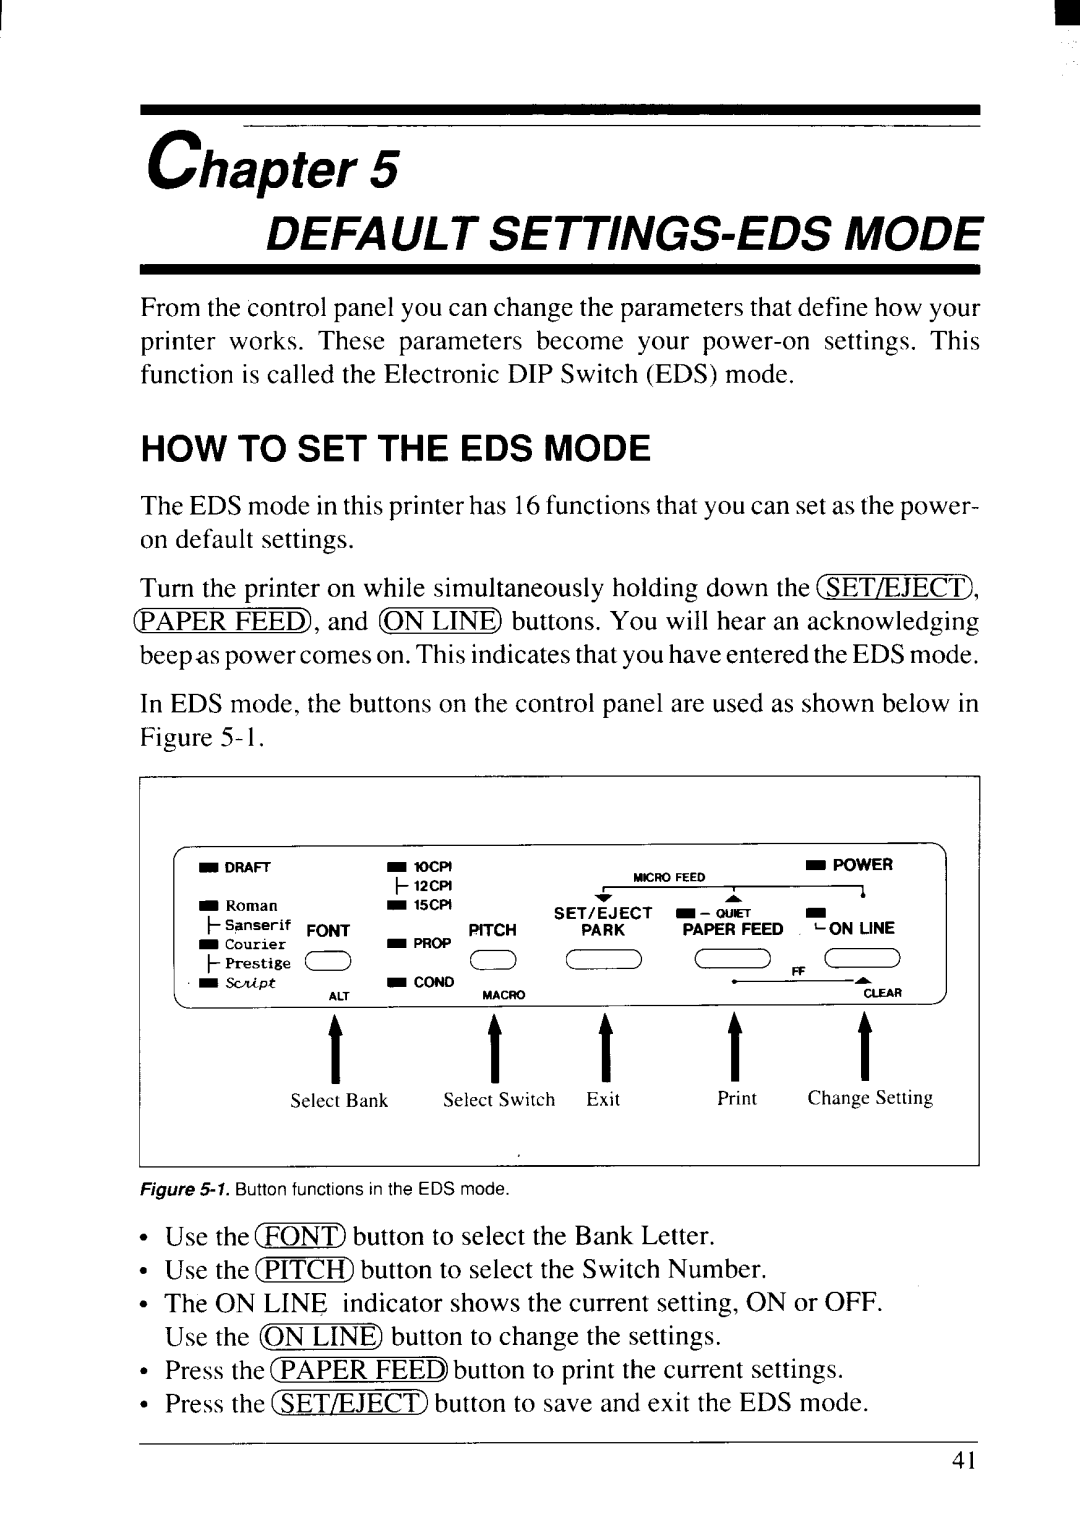 Star Micronics NX-2415II user manual Default Settings-Eds Mode, How To Set The Eds Mode 